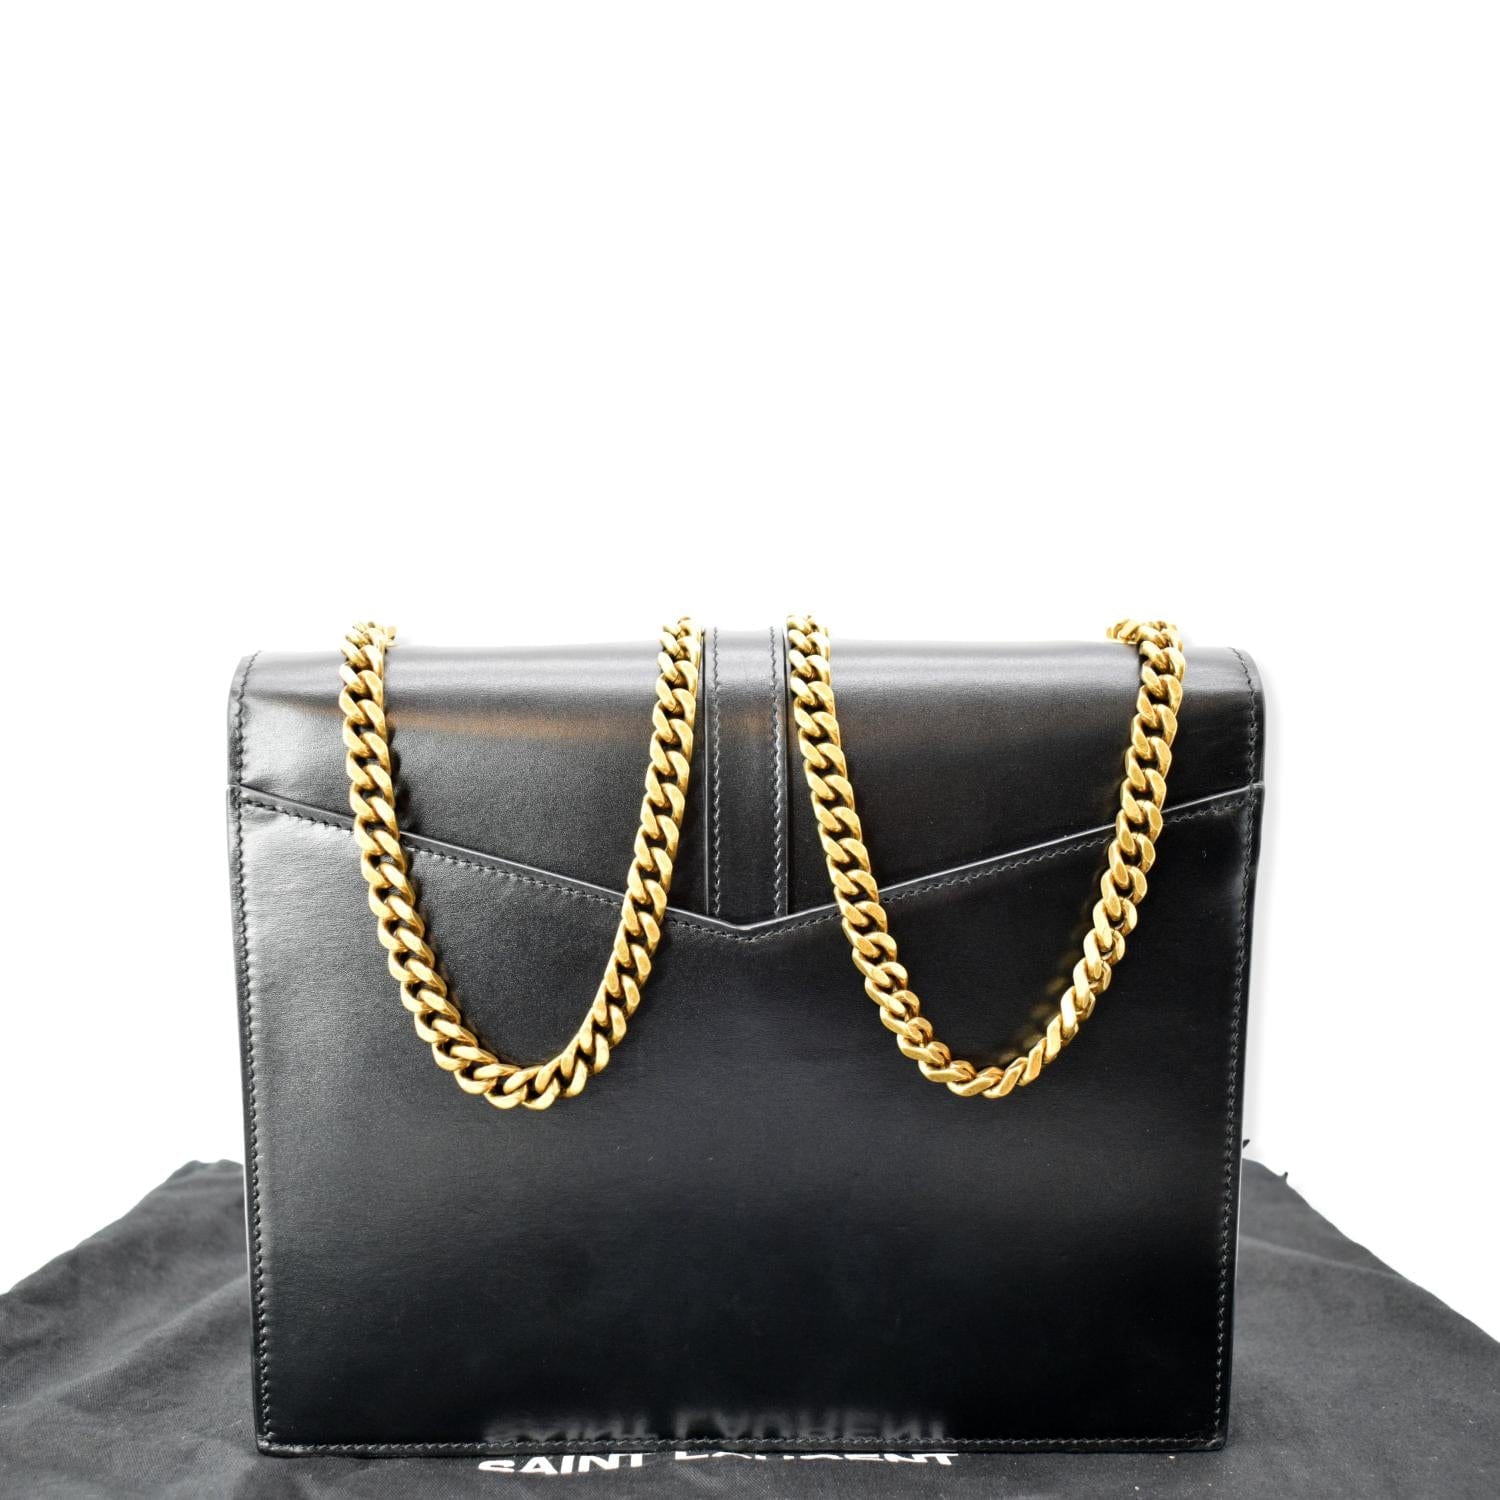 Luxmiila bags - LAST CALL 🔥 Ysl sulpice woc RM6300